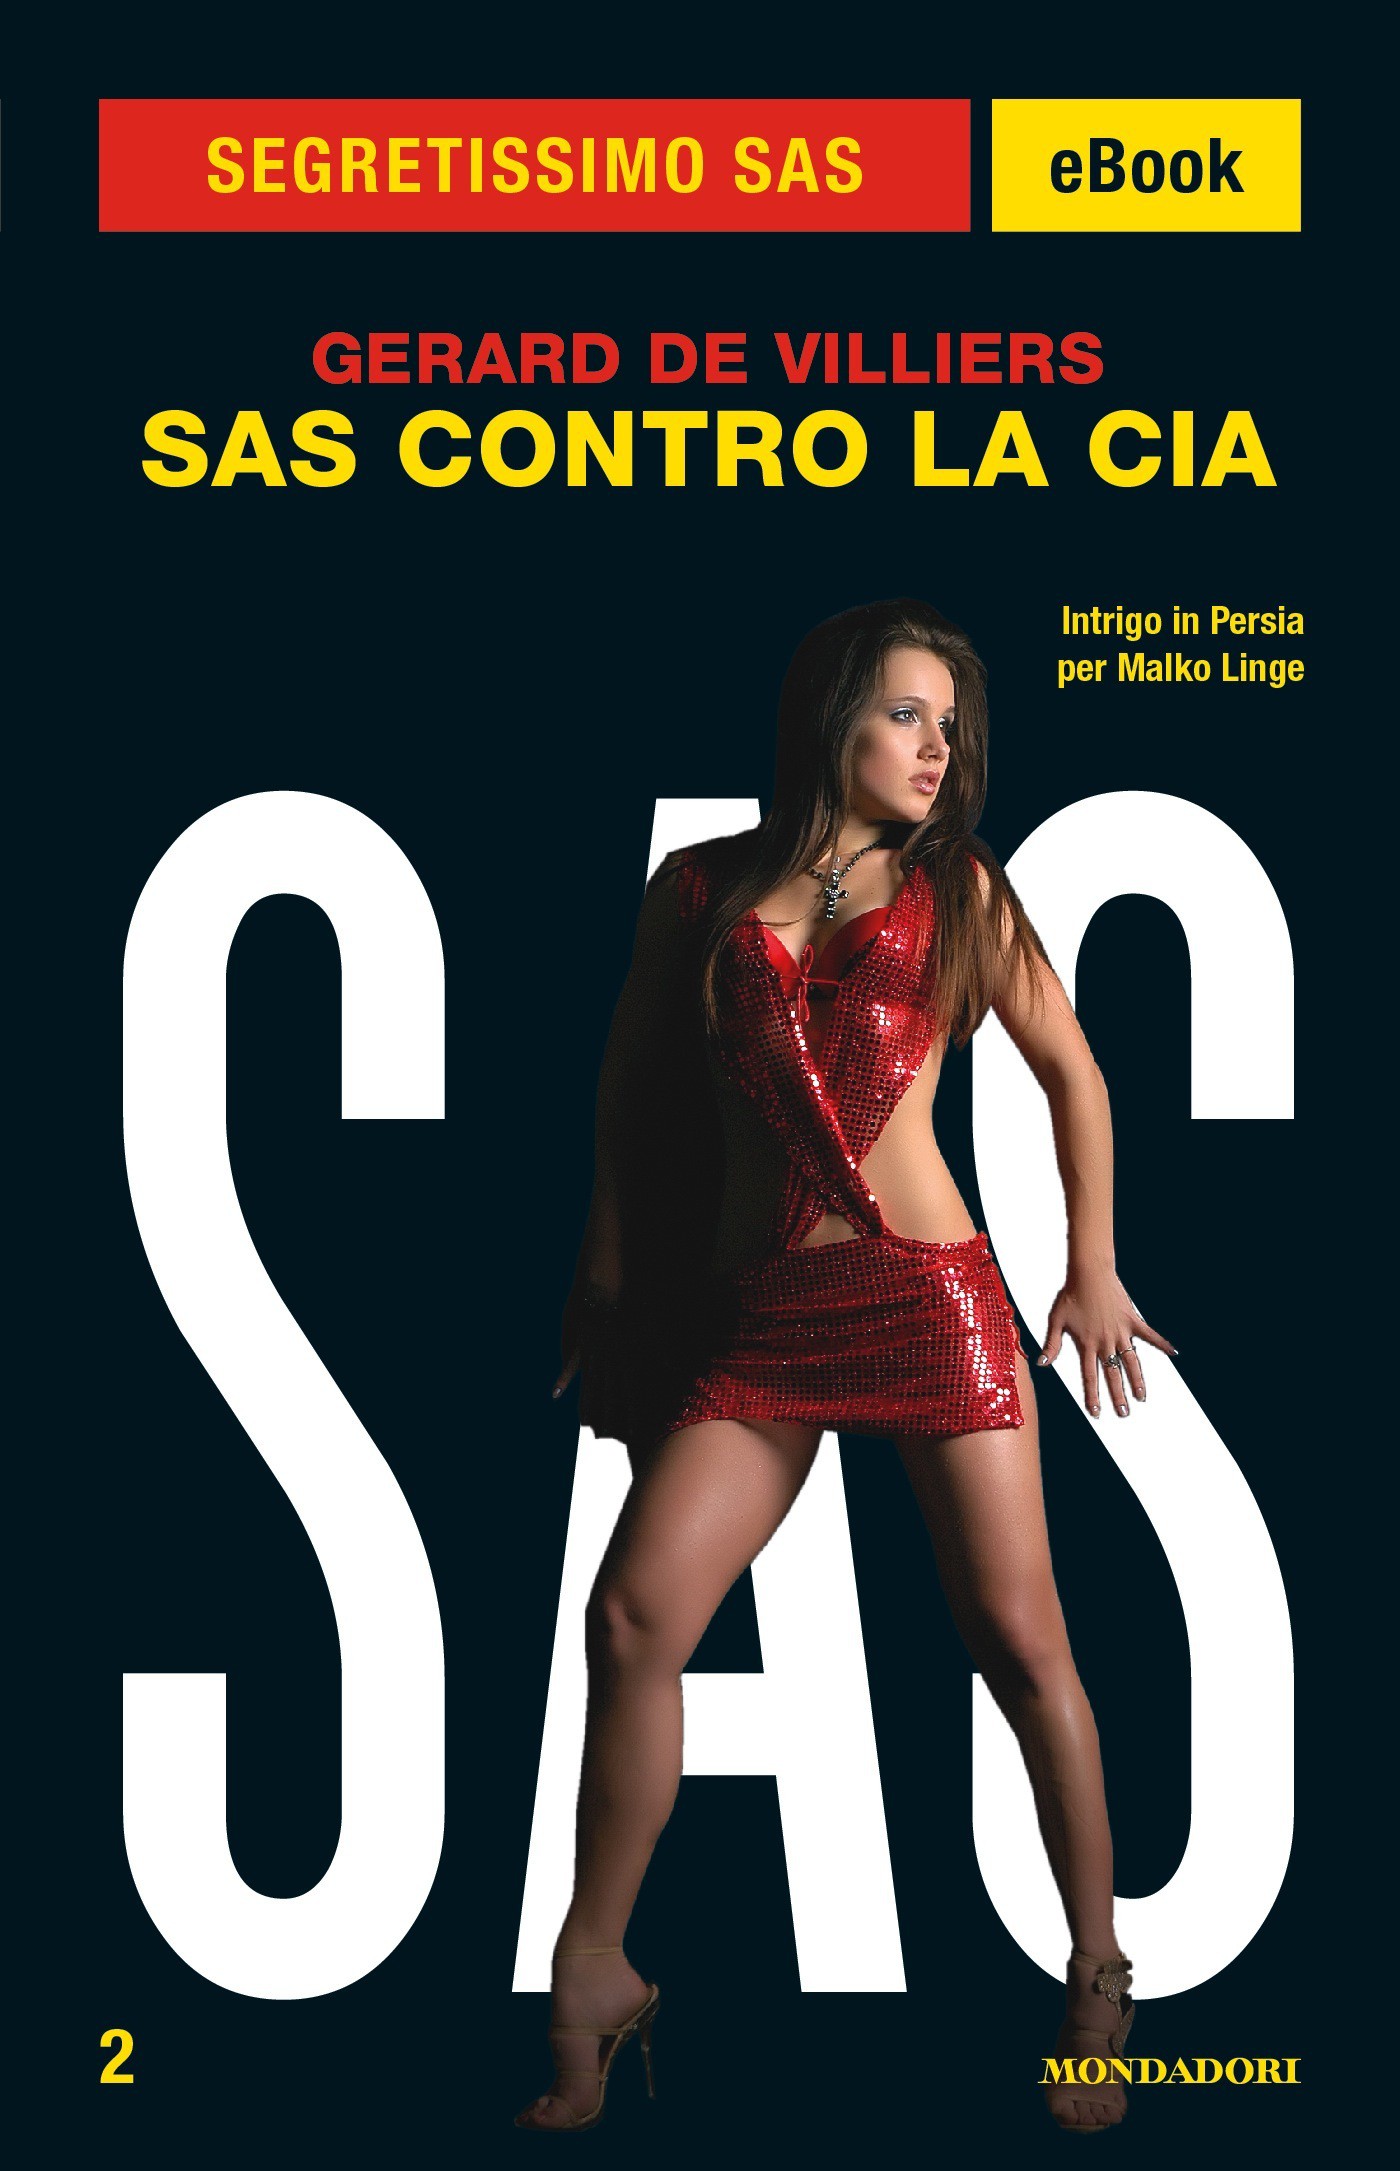 SAS contro la CIA (Segretissimo SAS) - Librerie.coop